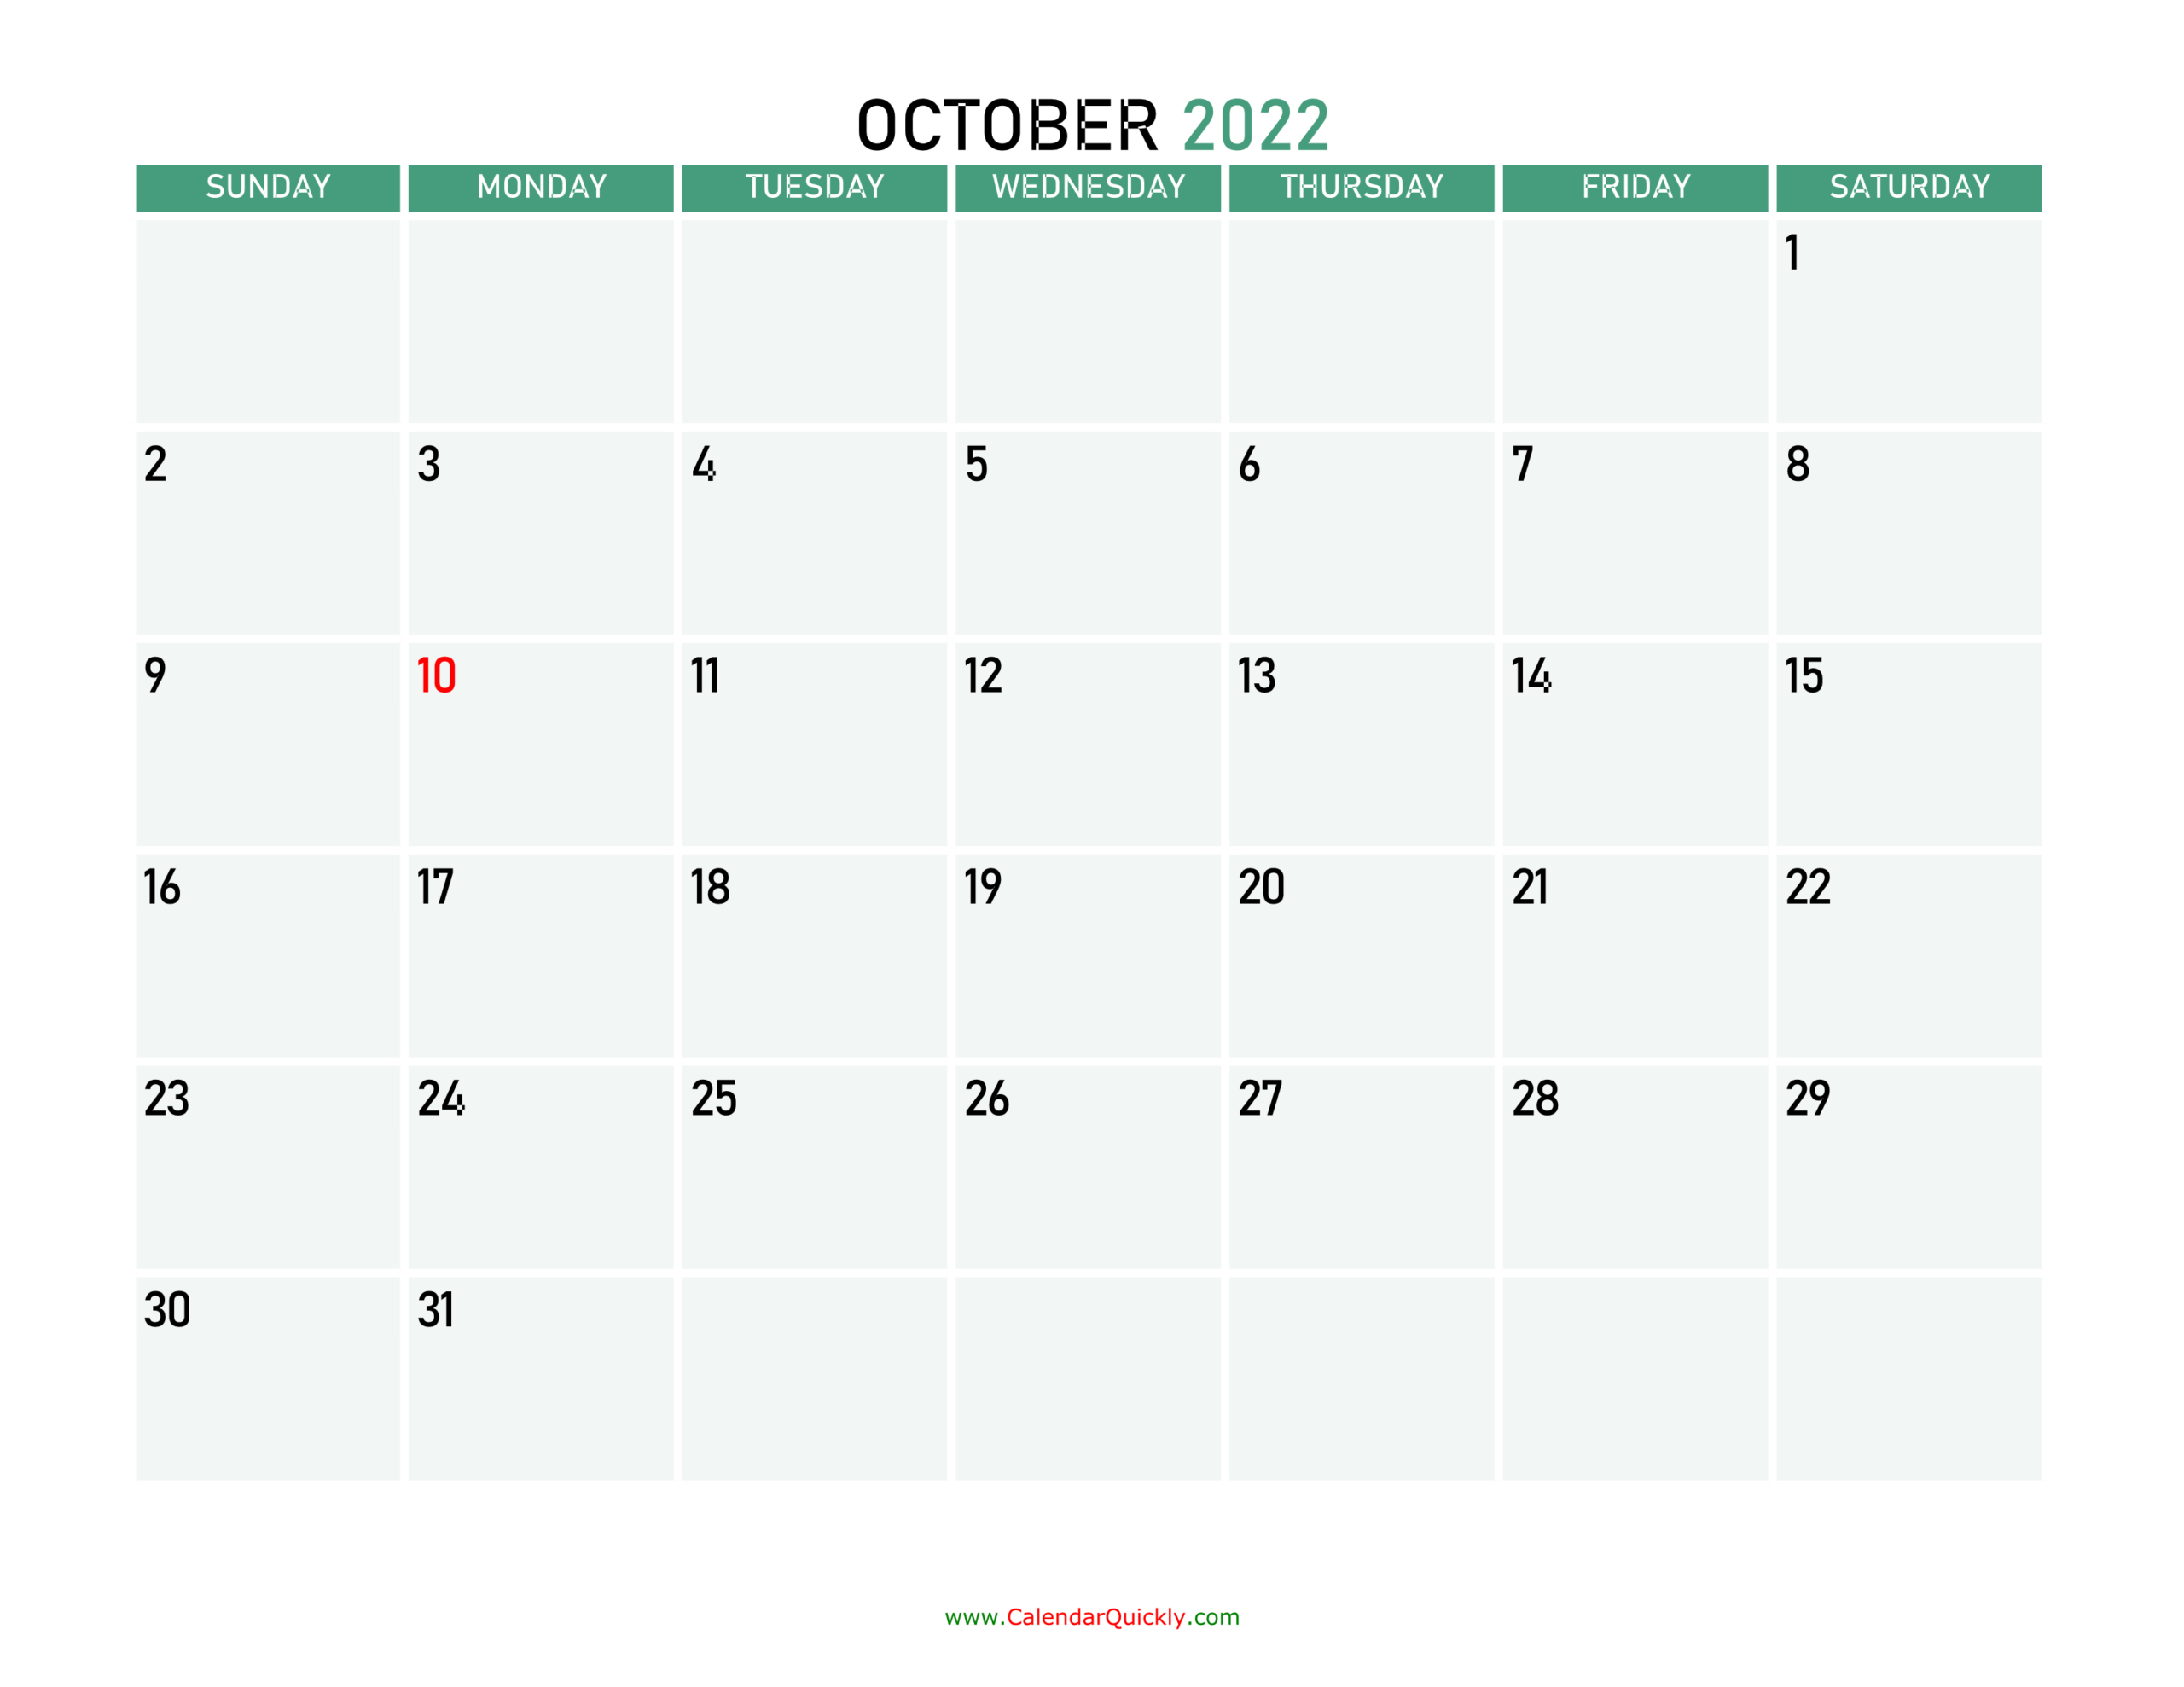 Catch October 2022 Holiday Calendar